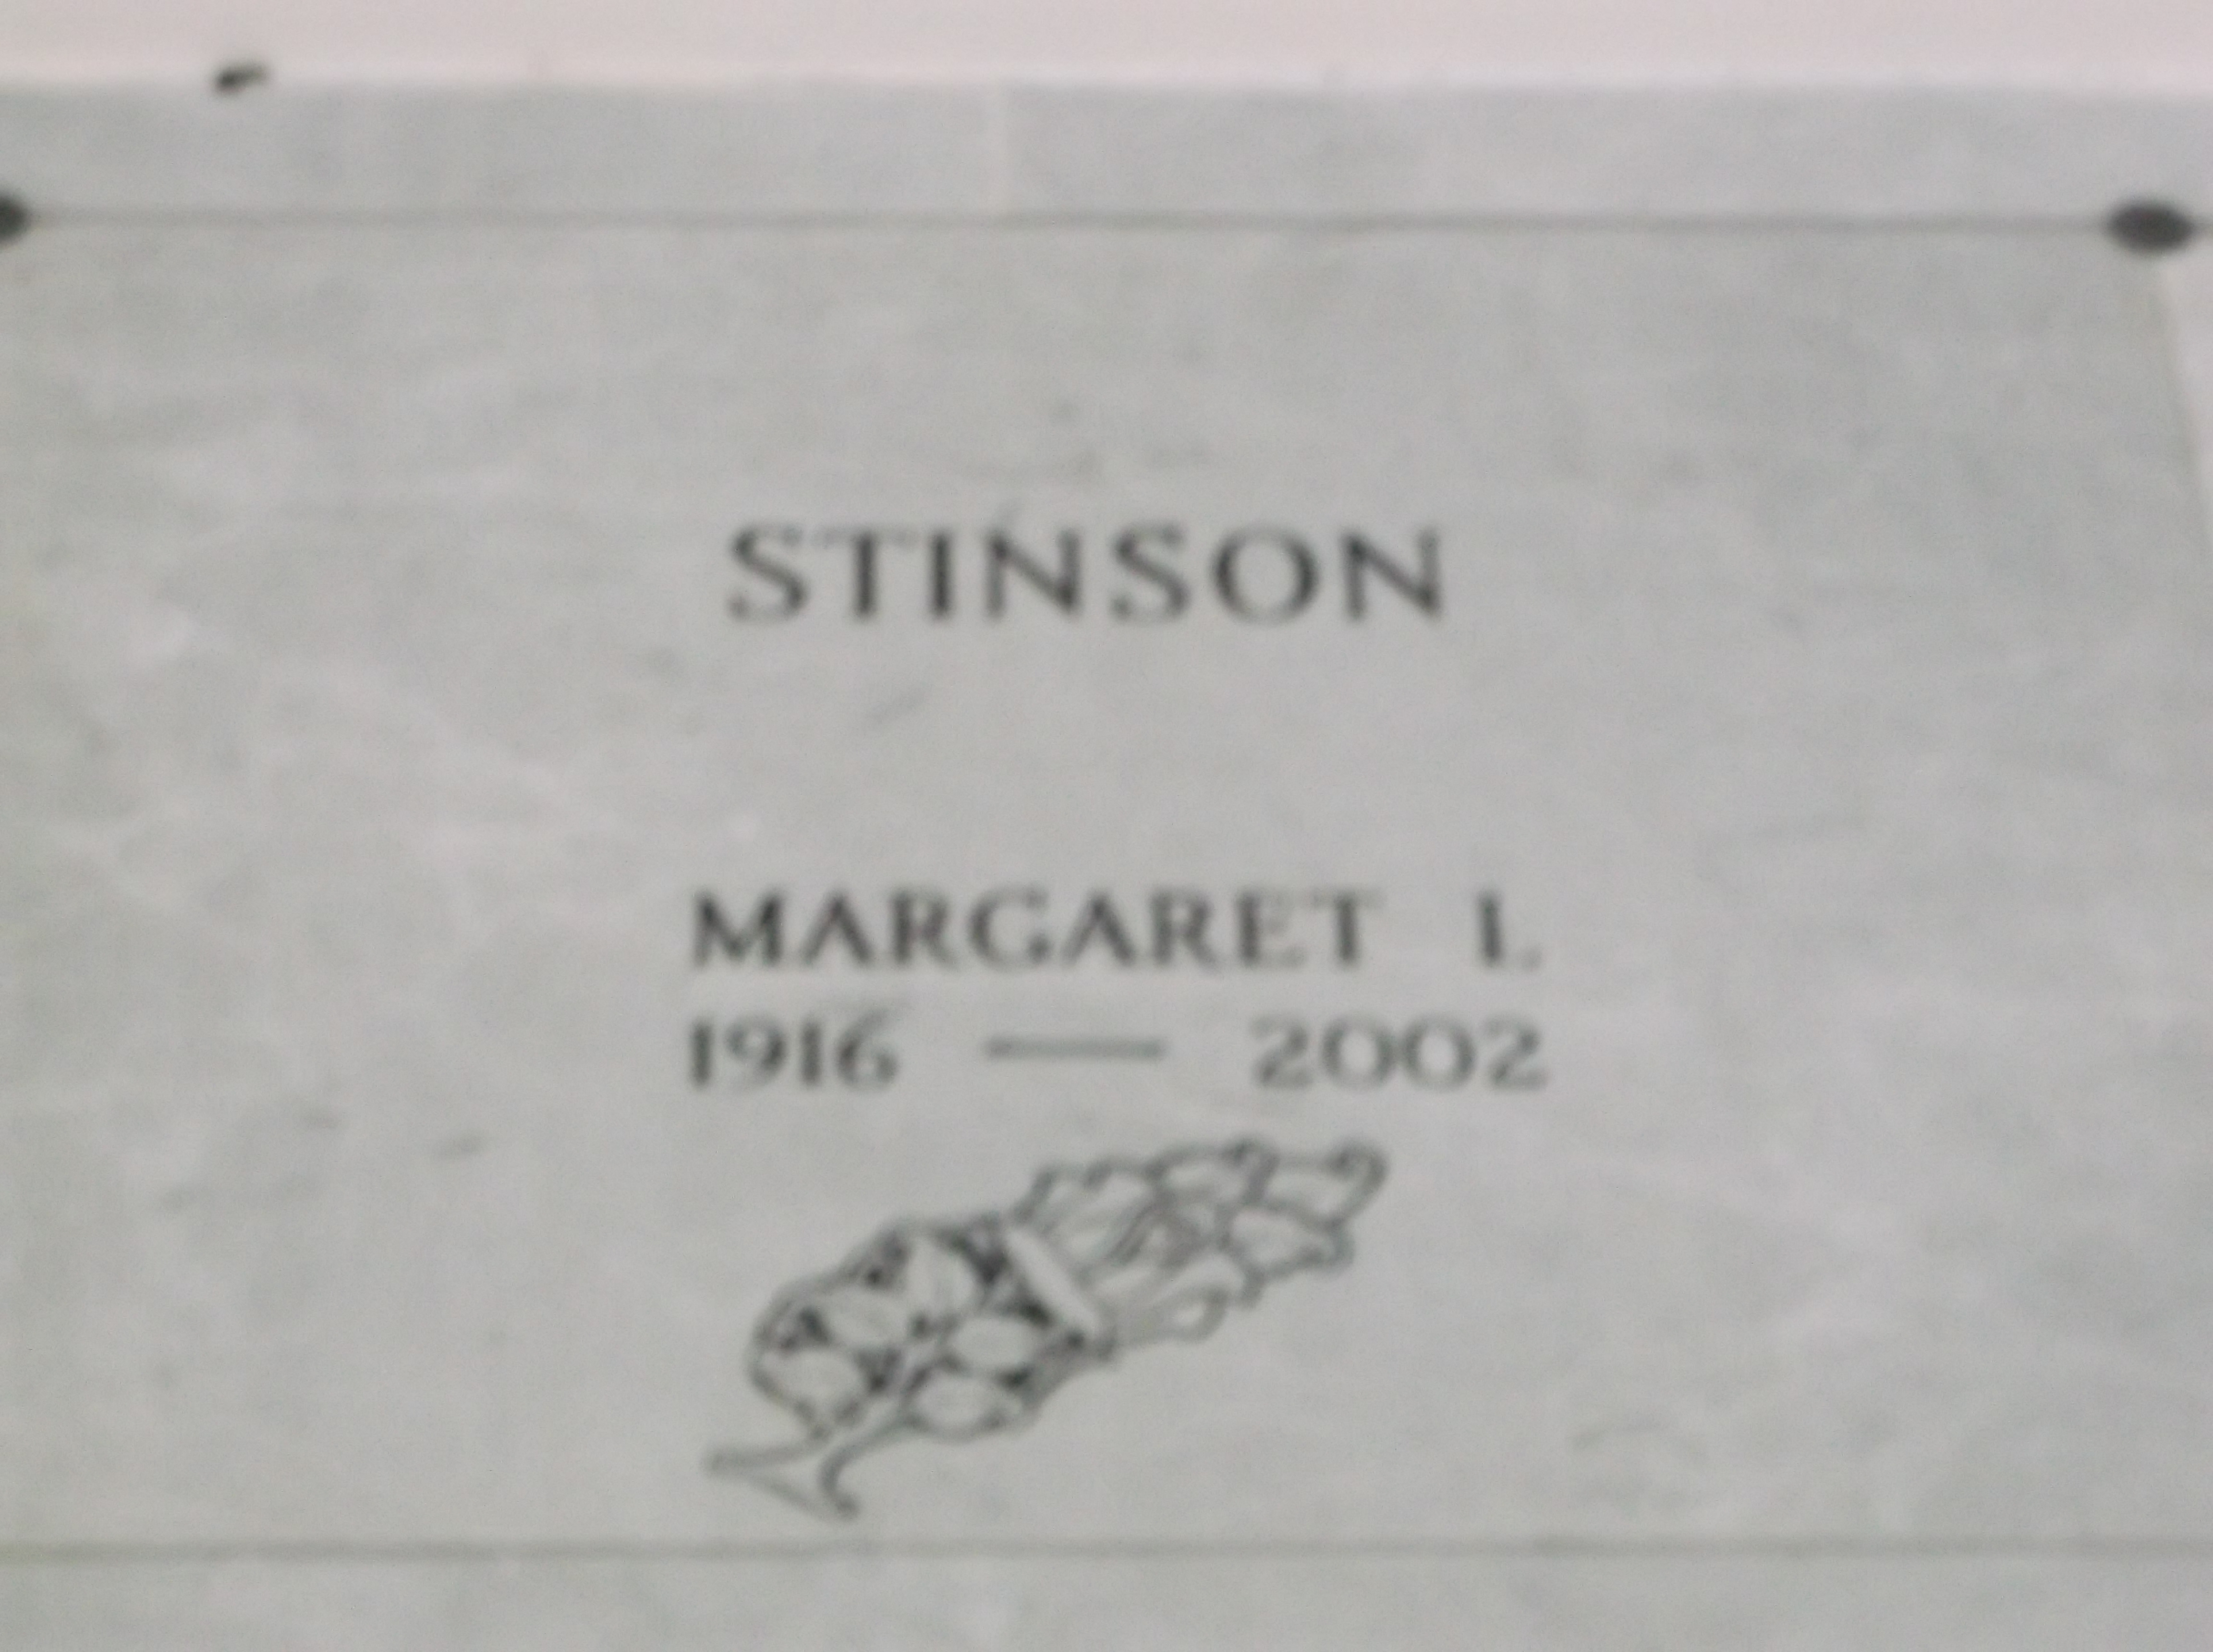 Margaret I Stinson